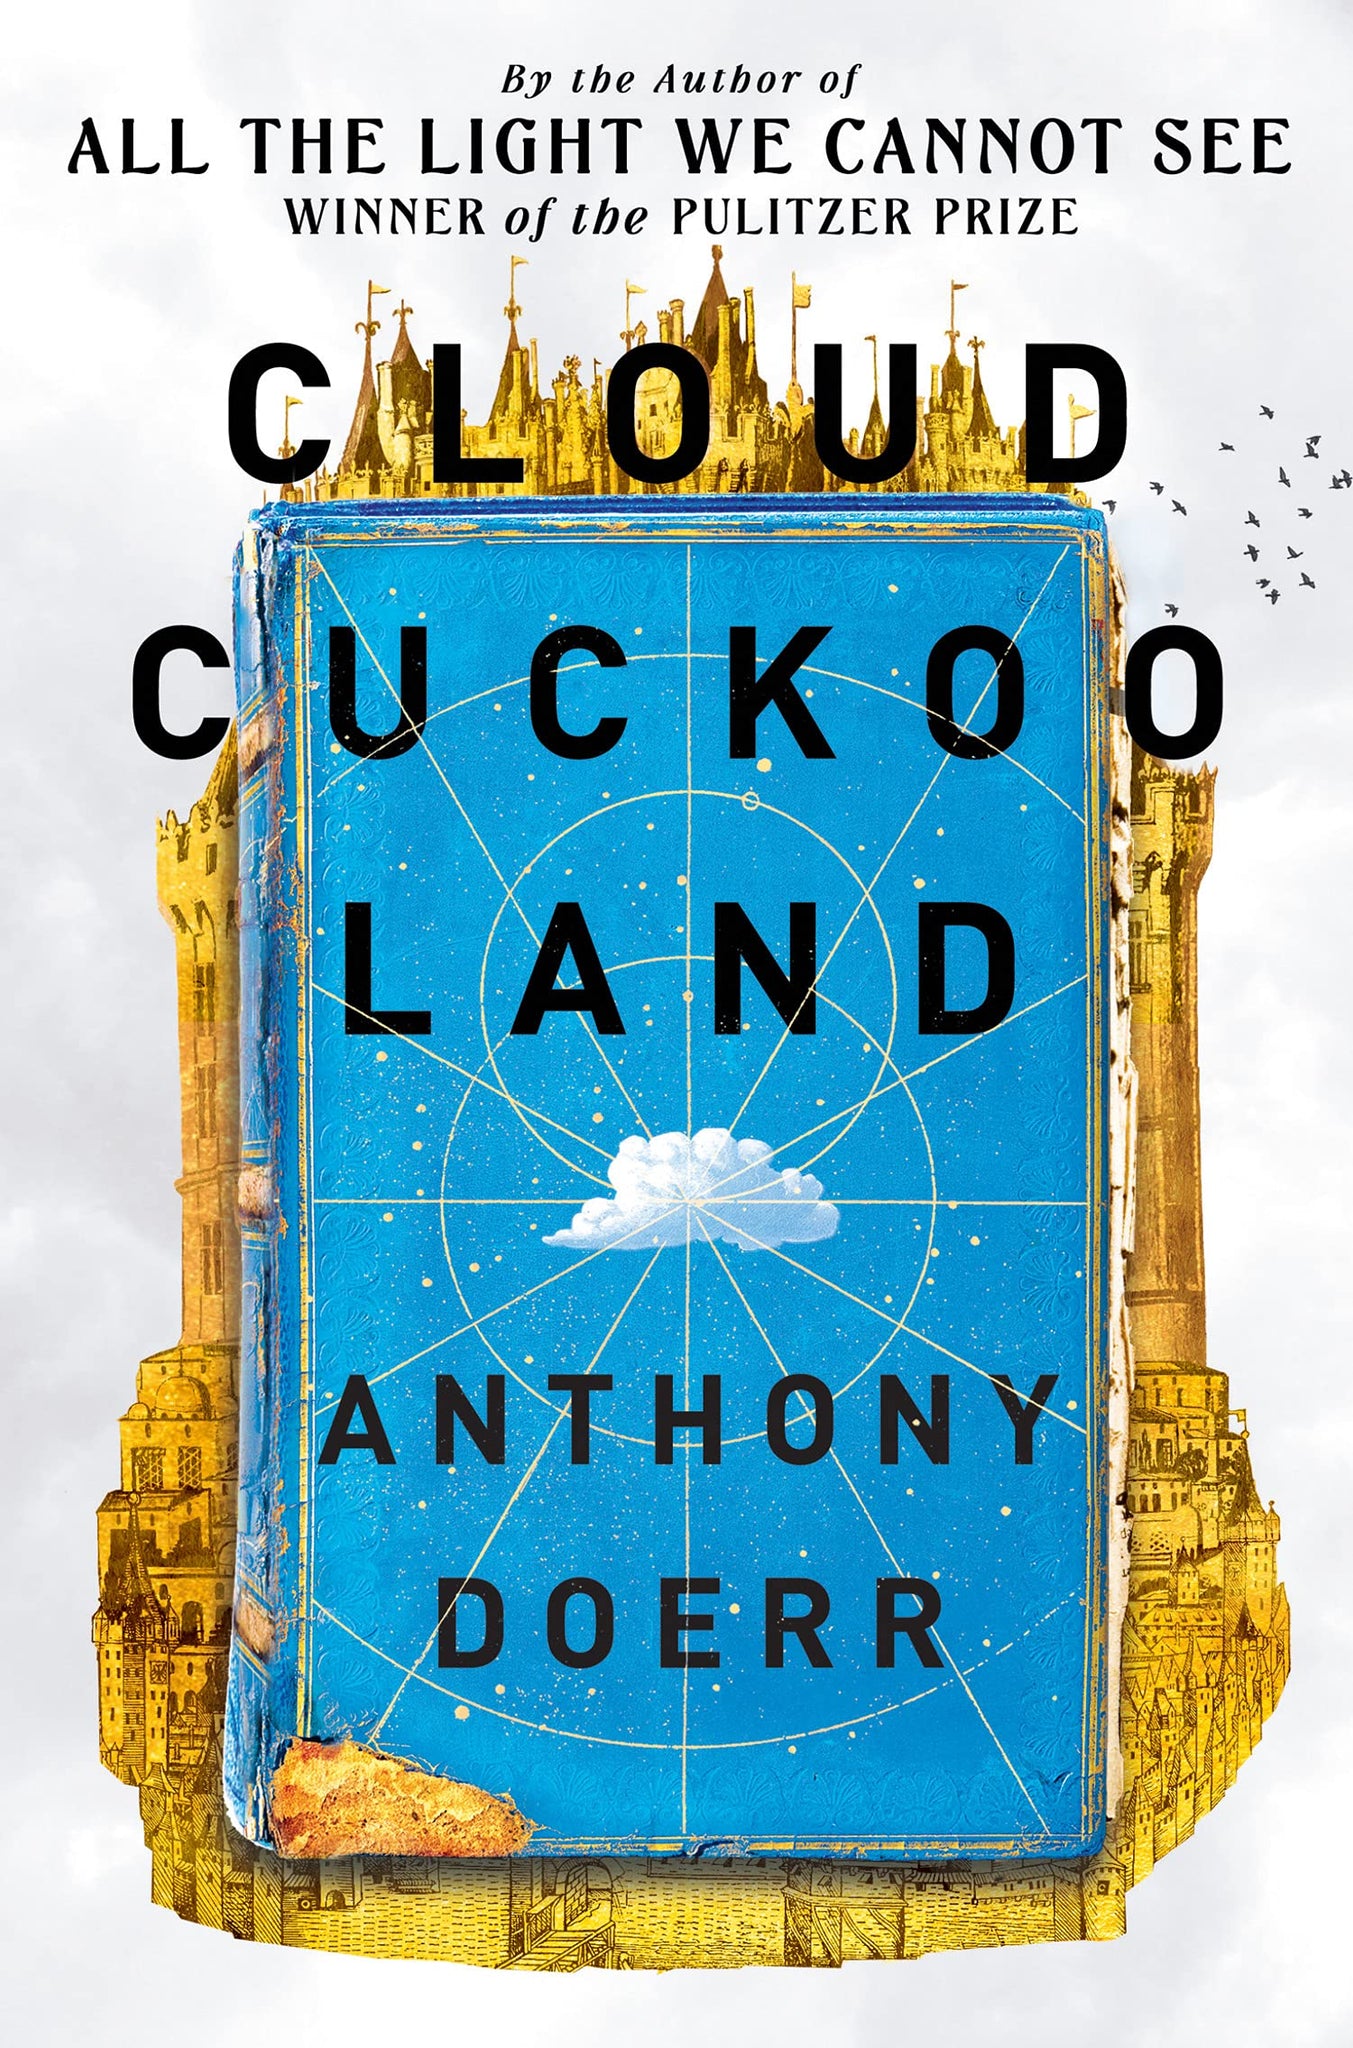 Cloud Cuckoo Land - Paperback